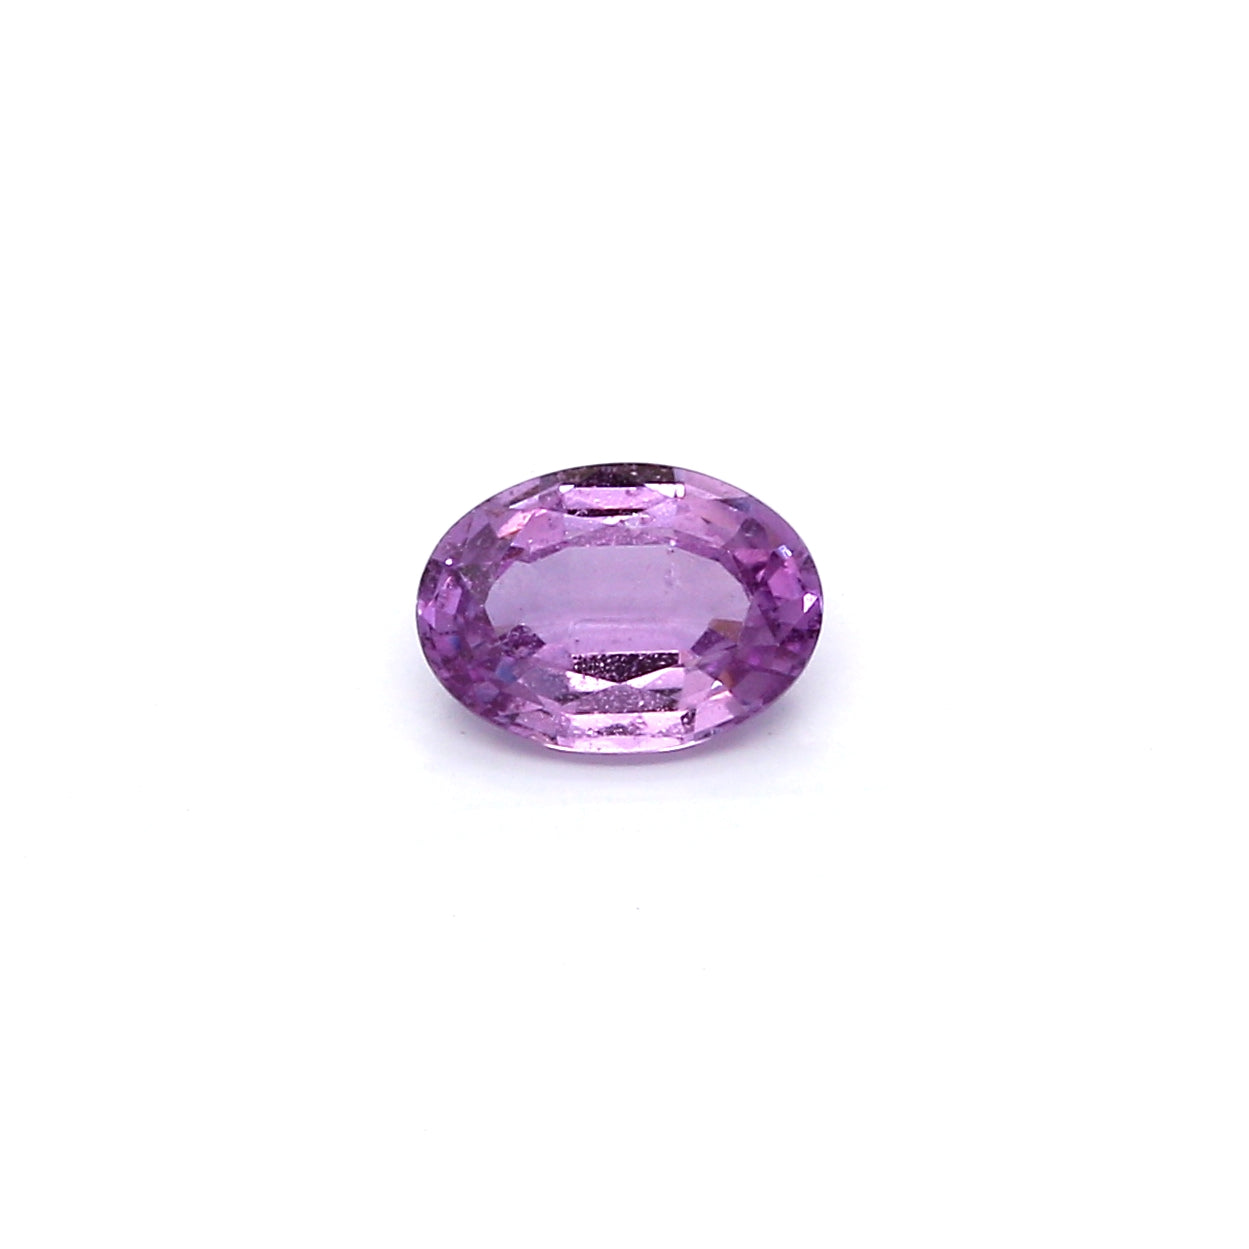 0.96ct Pinkish Purple, Oval Sapphire, Heated, Madagascar - 7.16 x 5.15 x 2.88mm